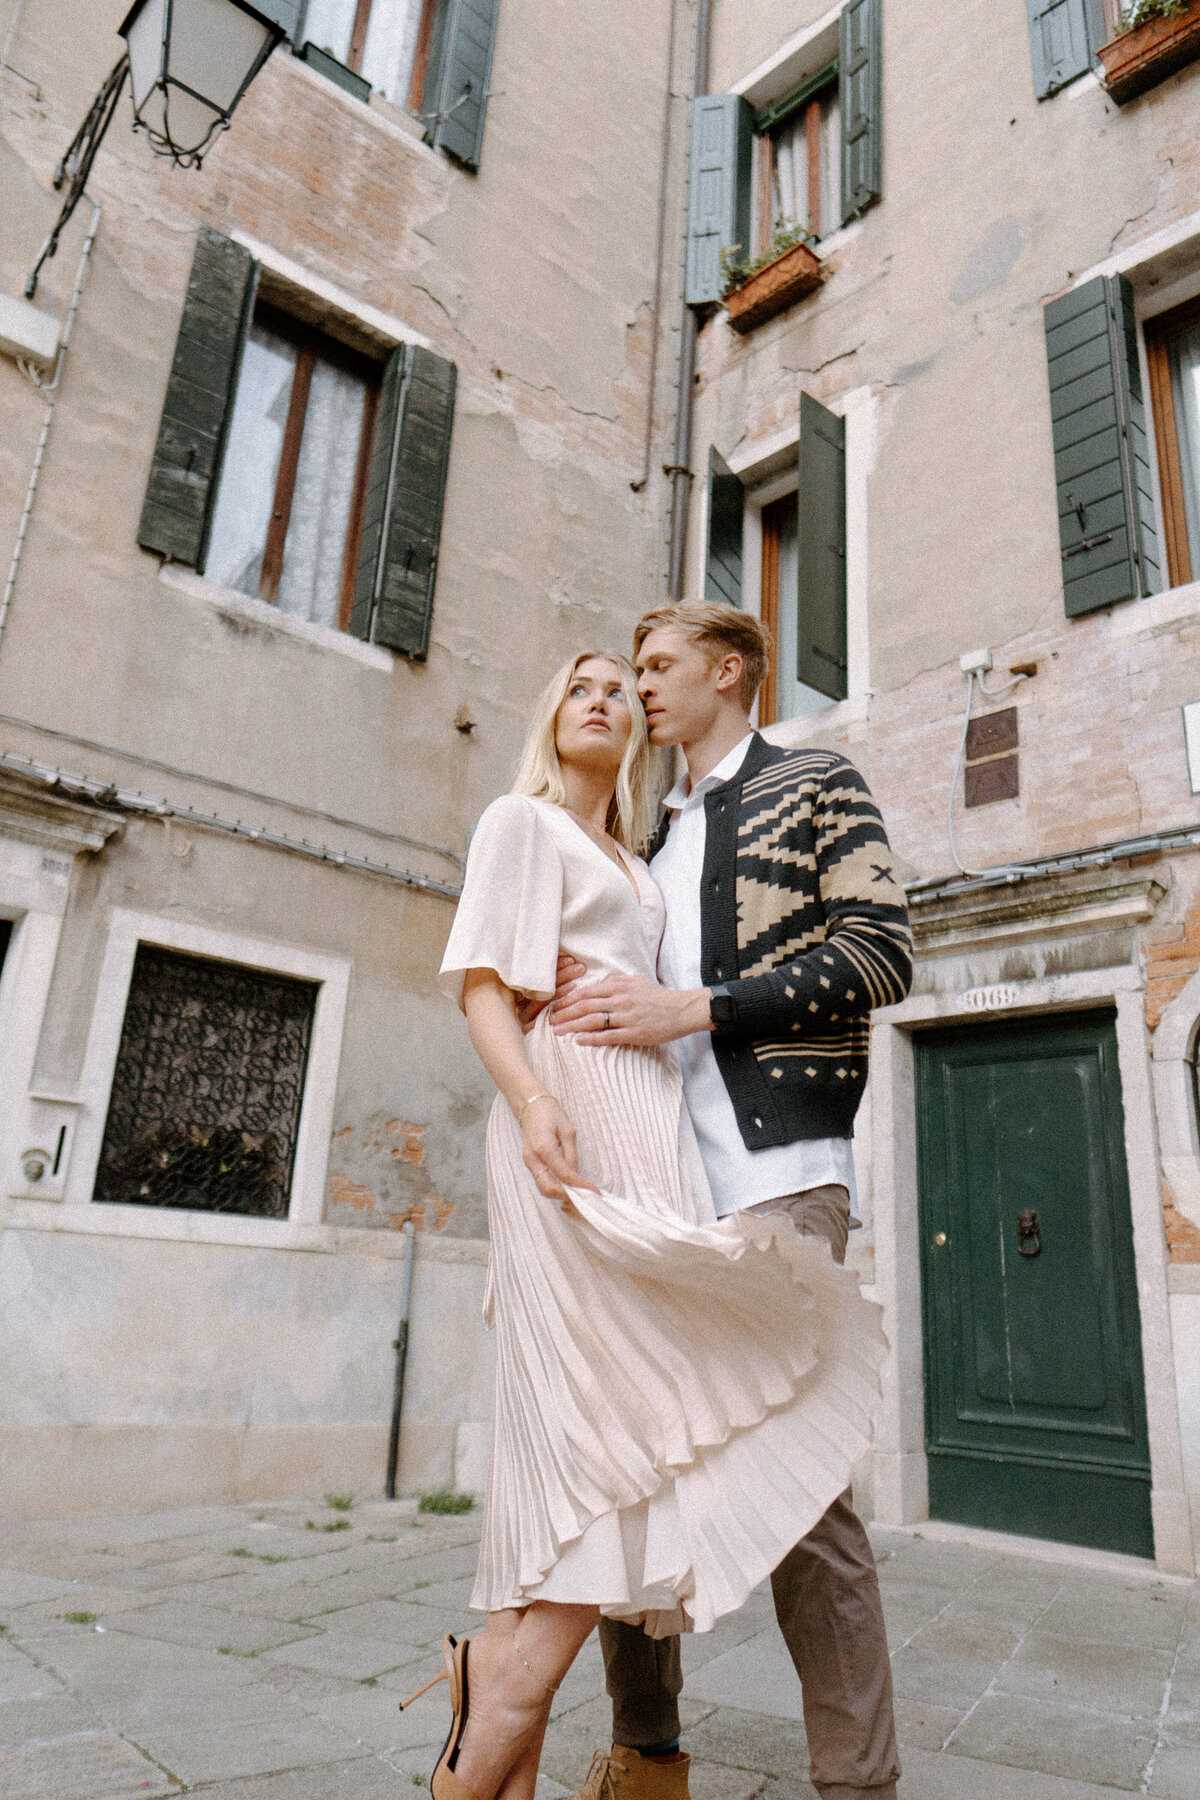 Documentary-Style-Editorial-Vogue-Italy-Destination-Wedding-Leah-Gunn-Photography-8